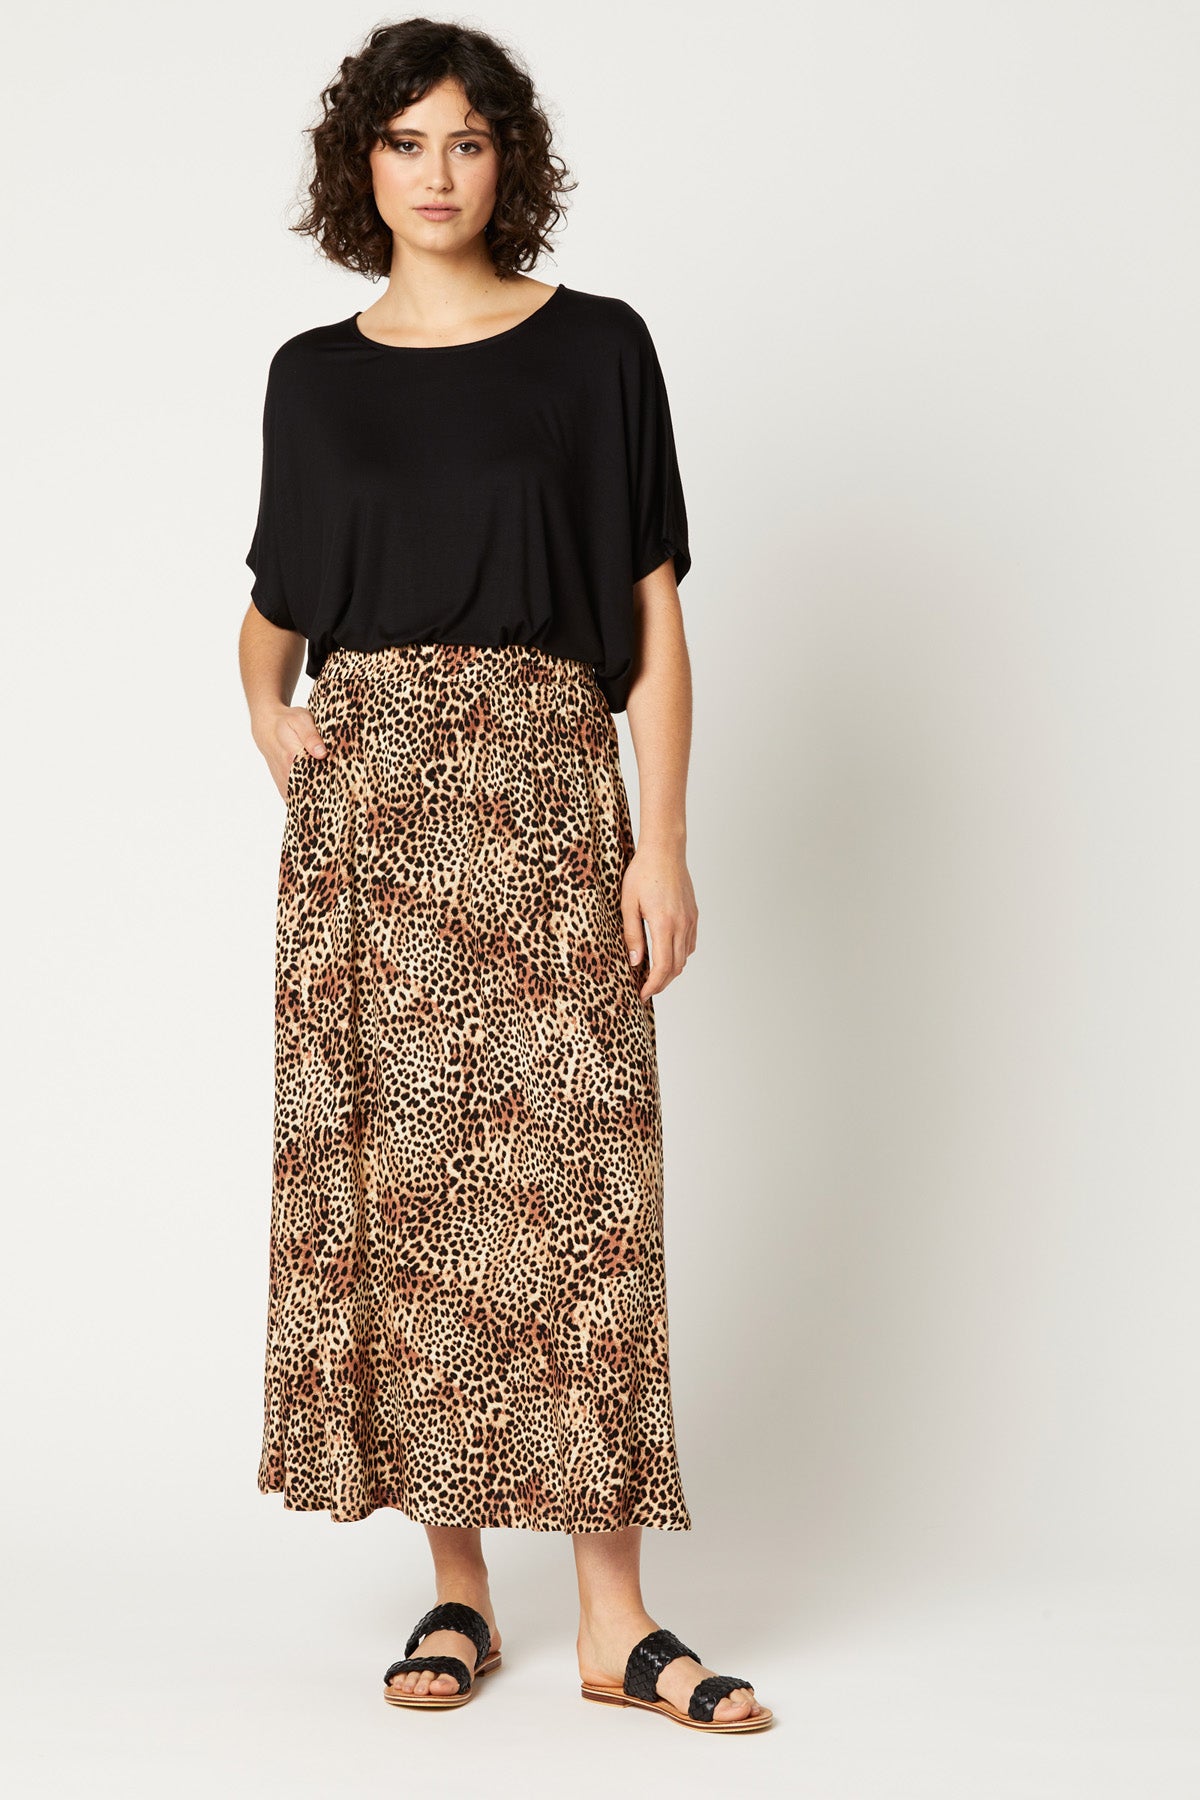 Tribal Skirt - Cheetah - eb&ive Clothing - Skirt Maxi